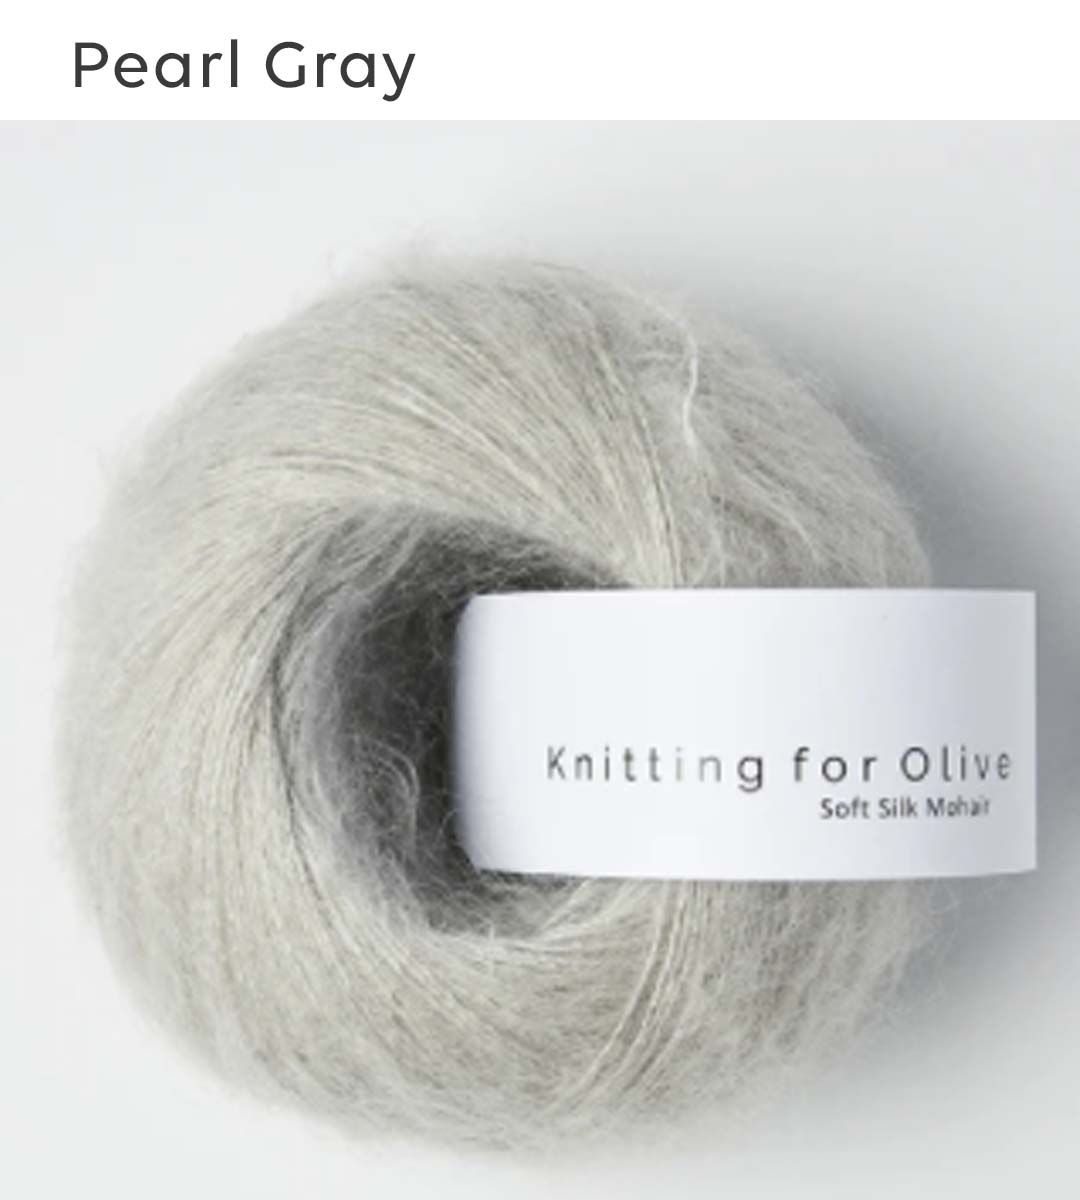 Pearl gray